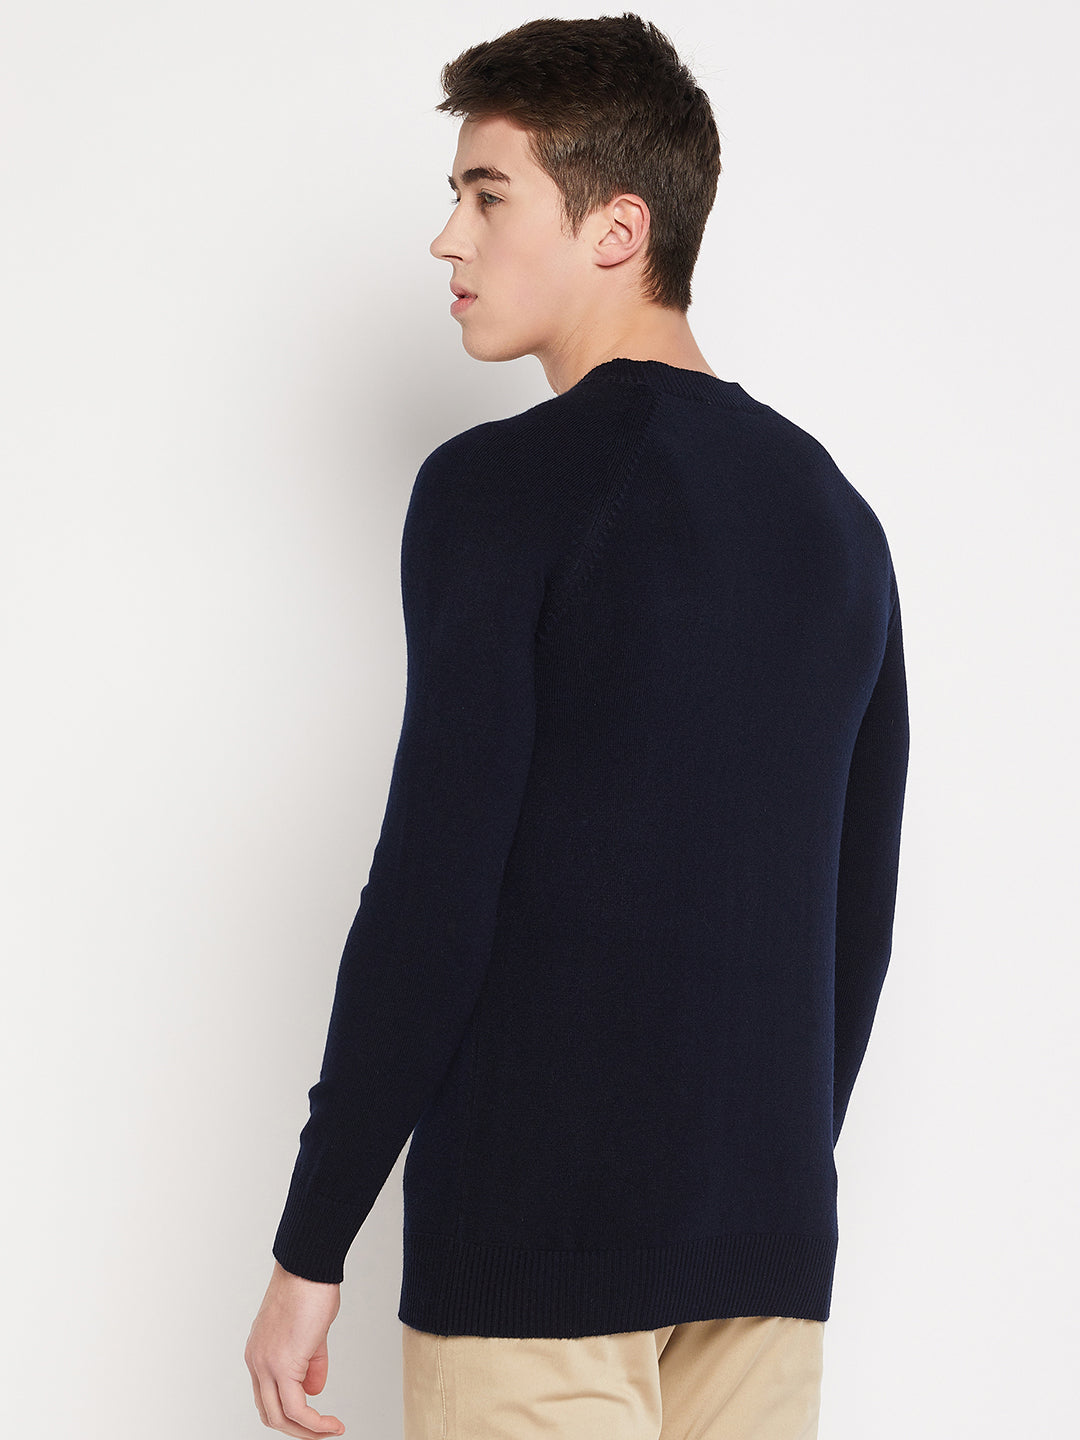 Camla Barcelona Navy Sweater For Men